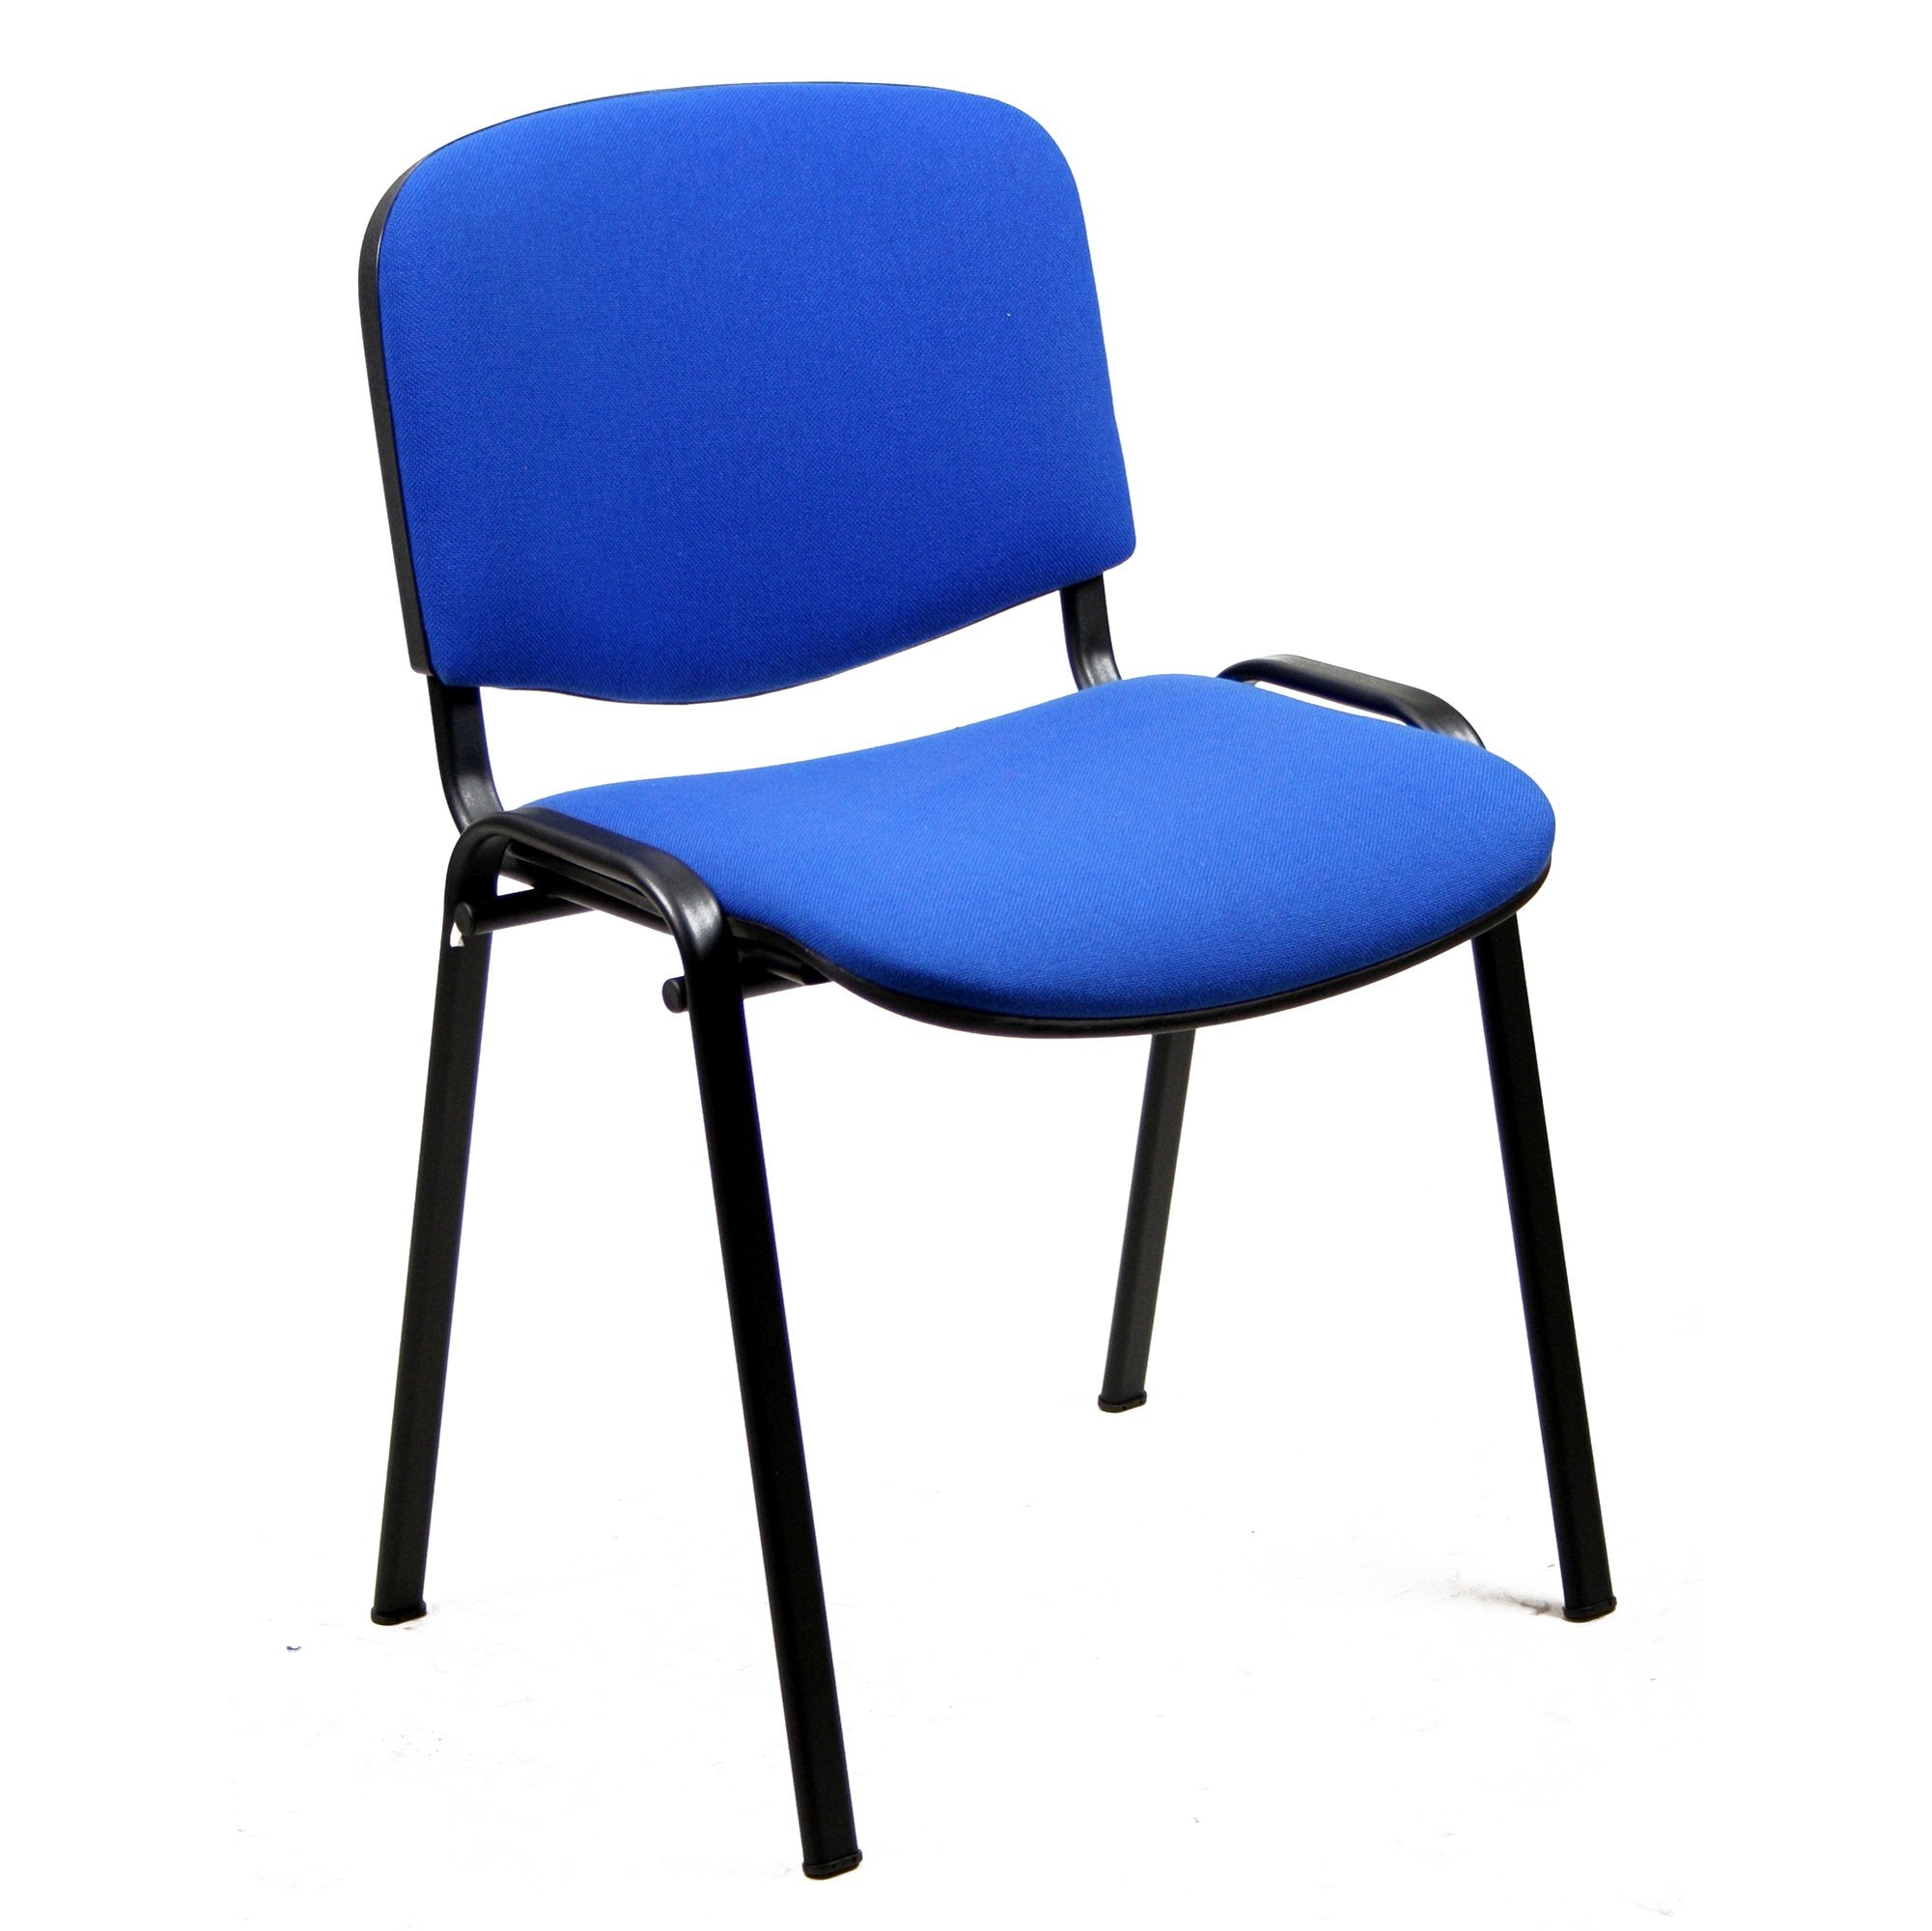 unisit-sedia-attesa-dado-d5s-no-flame-blu-senza-braccioli